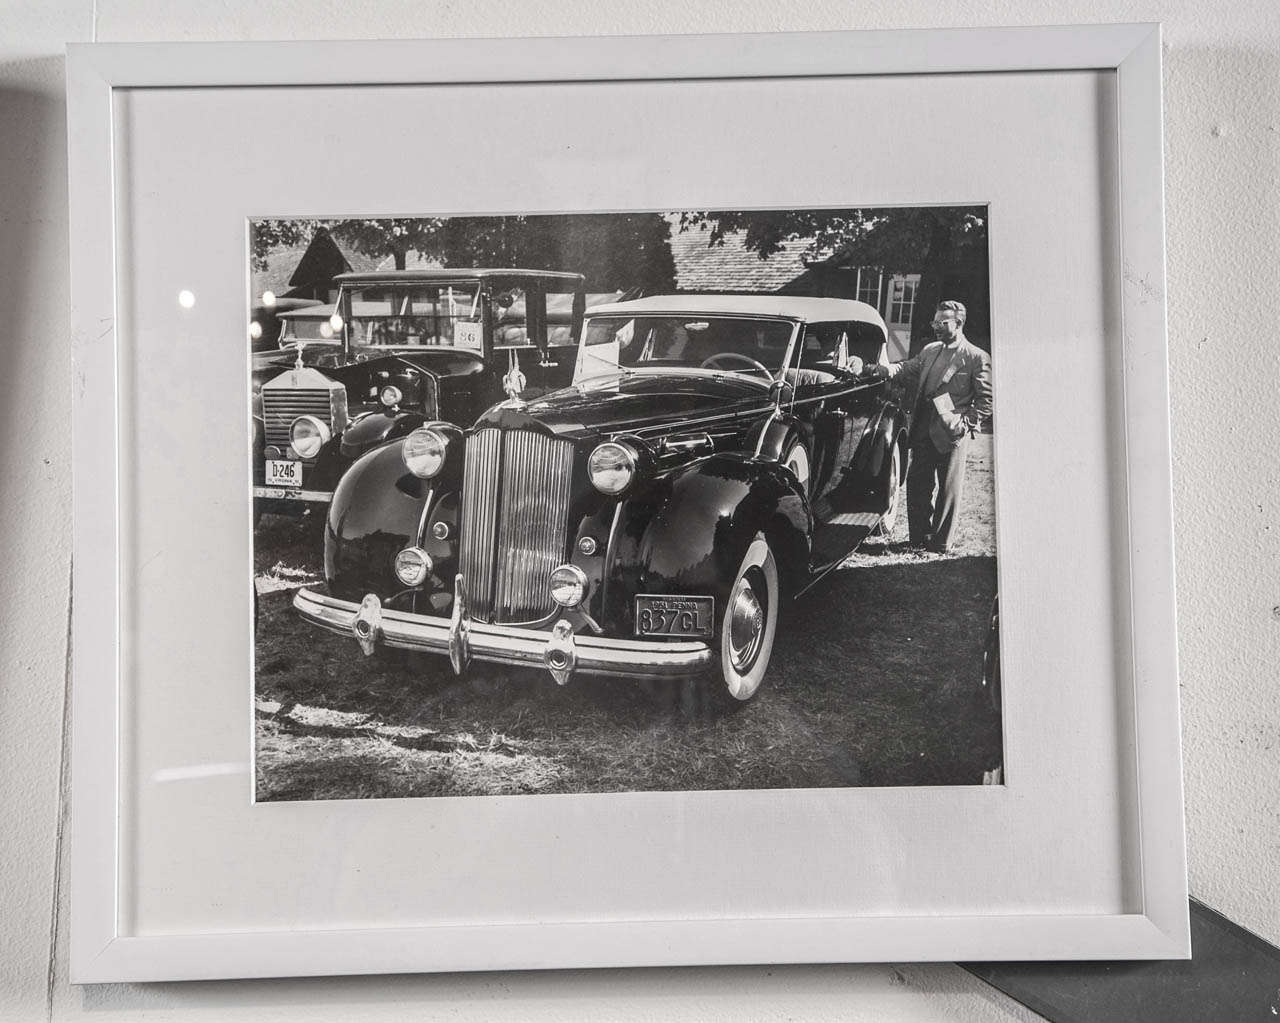 Set of 9 framed original photographs of 1920's cars.